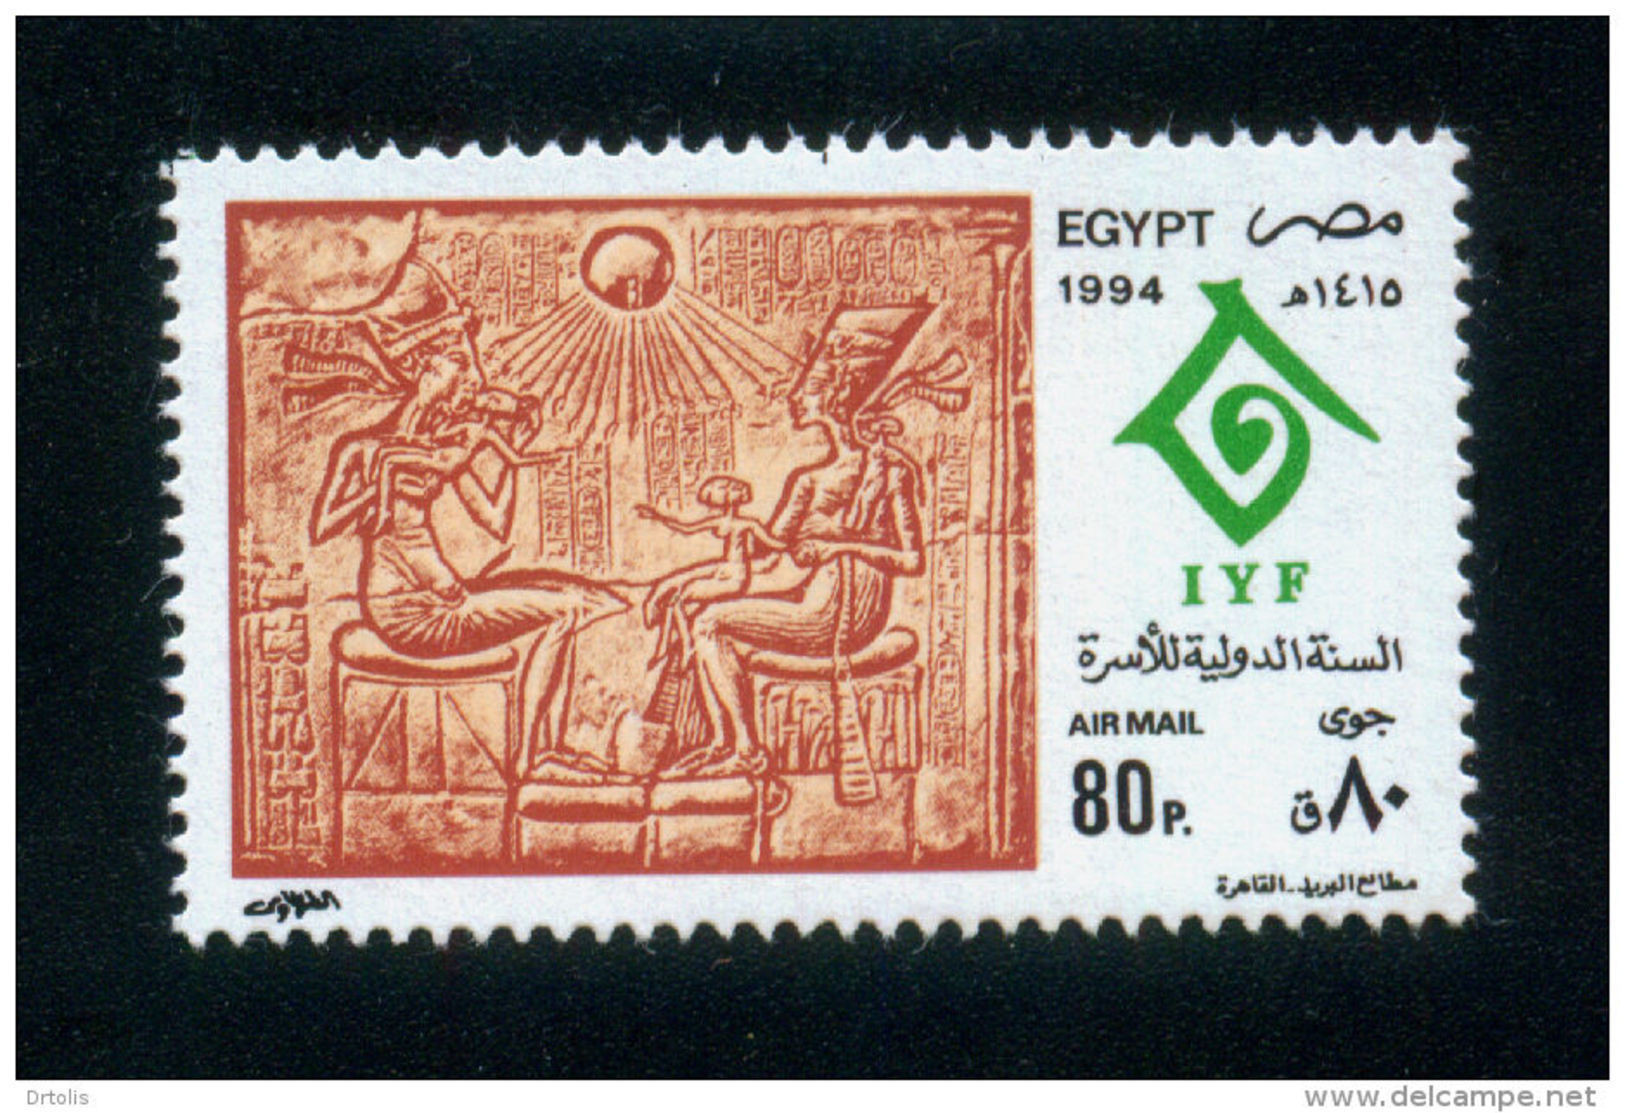 EGYPT / 1994 / UN / UN'S DAY / IYF/ INTL YEAR OF THE FAMILY / EGYPTOLOGY / AKHENATEN ; NEFERTITI & CHILDREN / MNH / VF - Nuevos